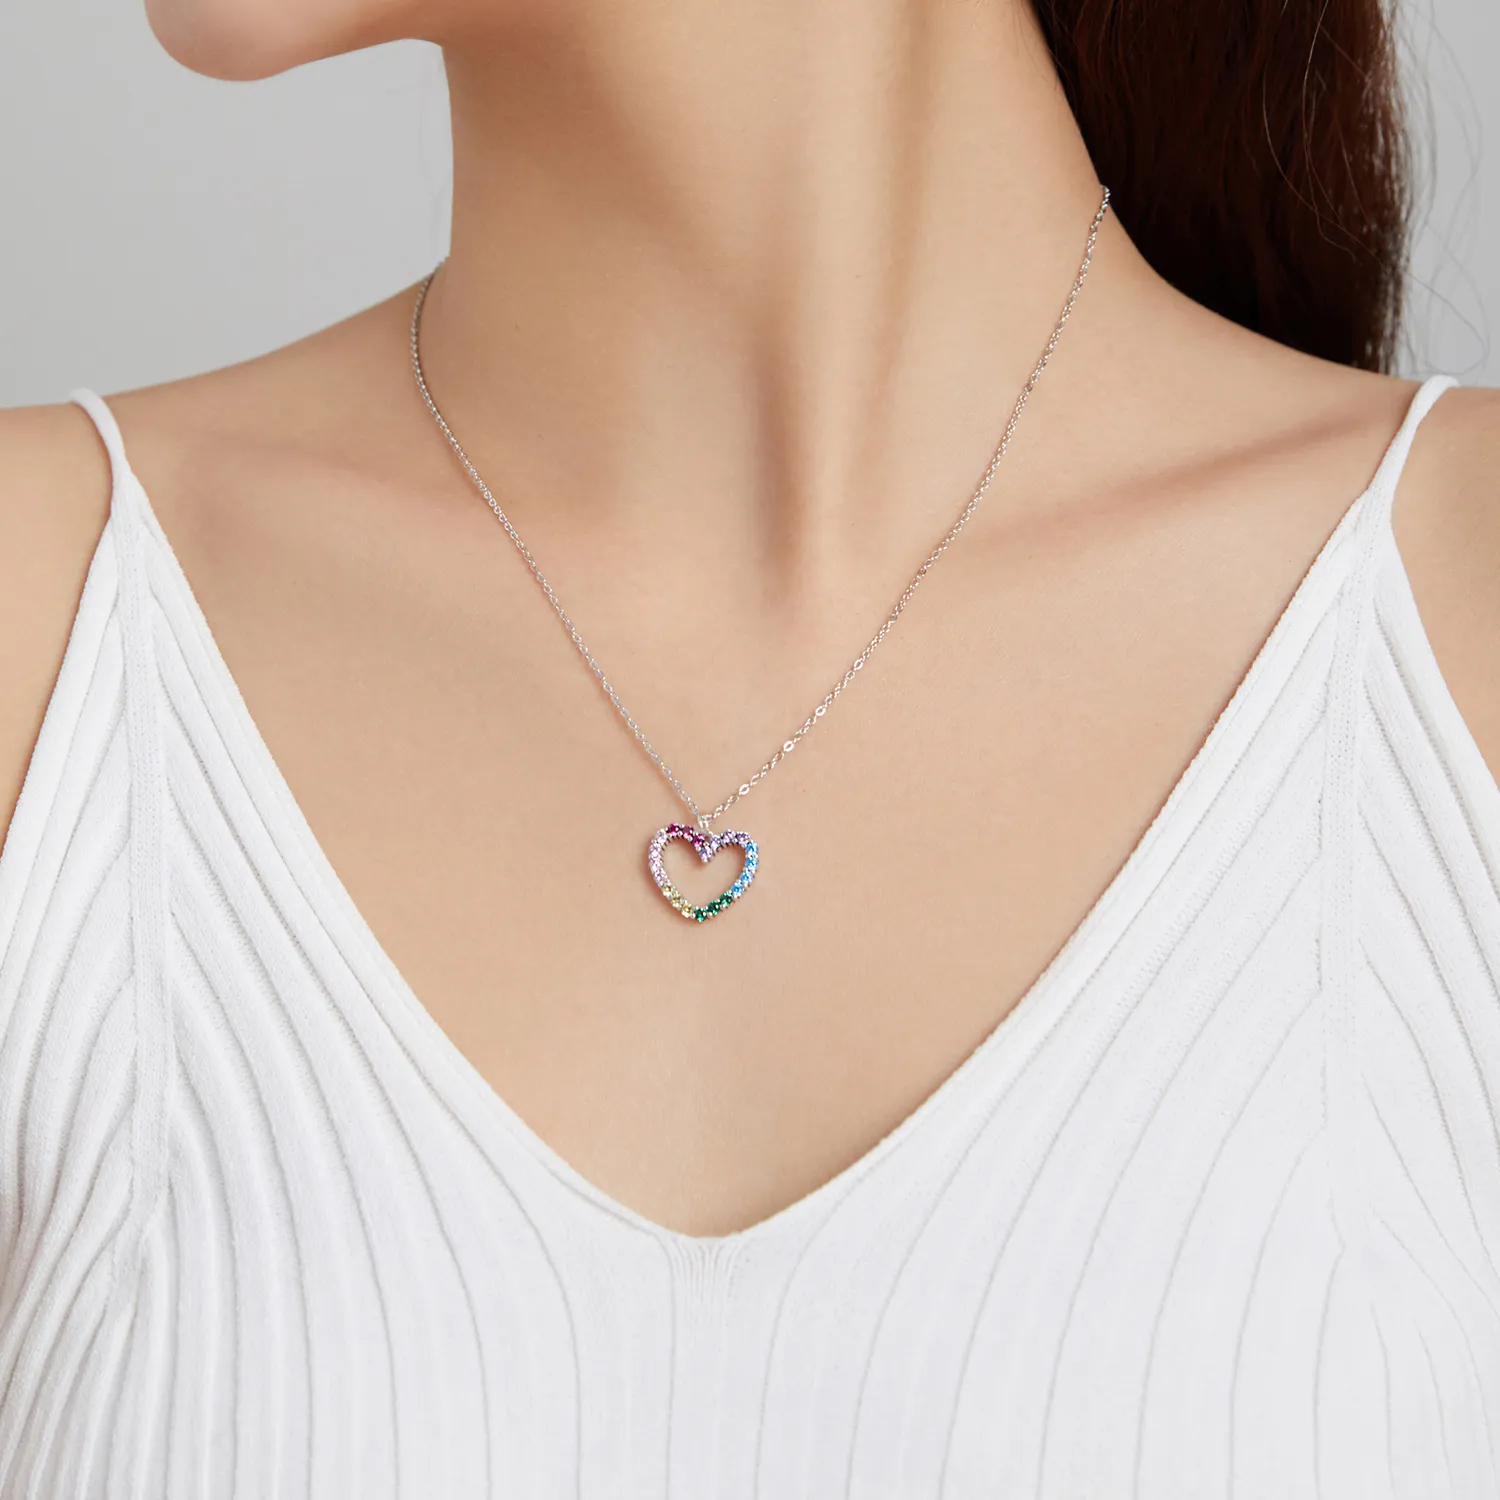 Pandora Style Silver Love of Rainbow Pendant Necklace - SCN449